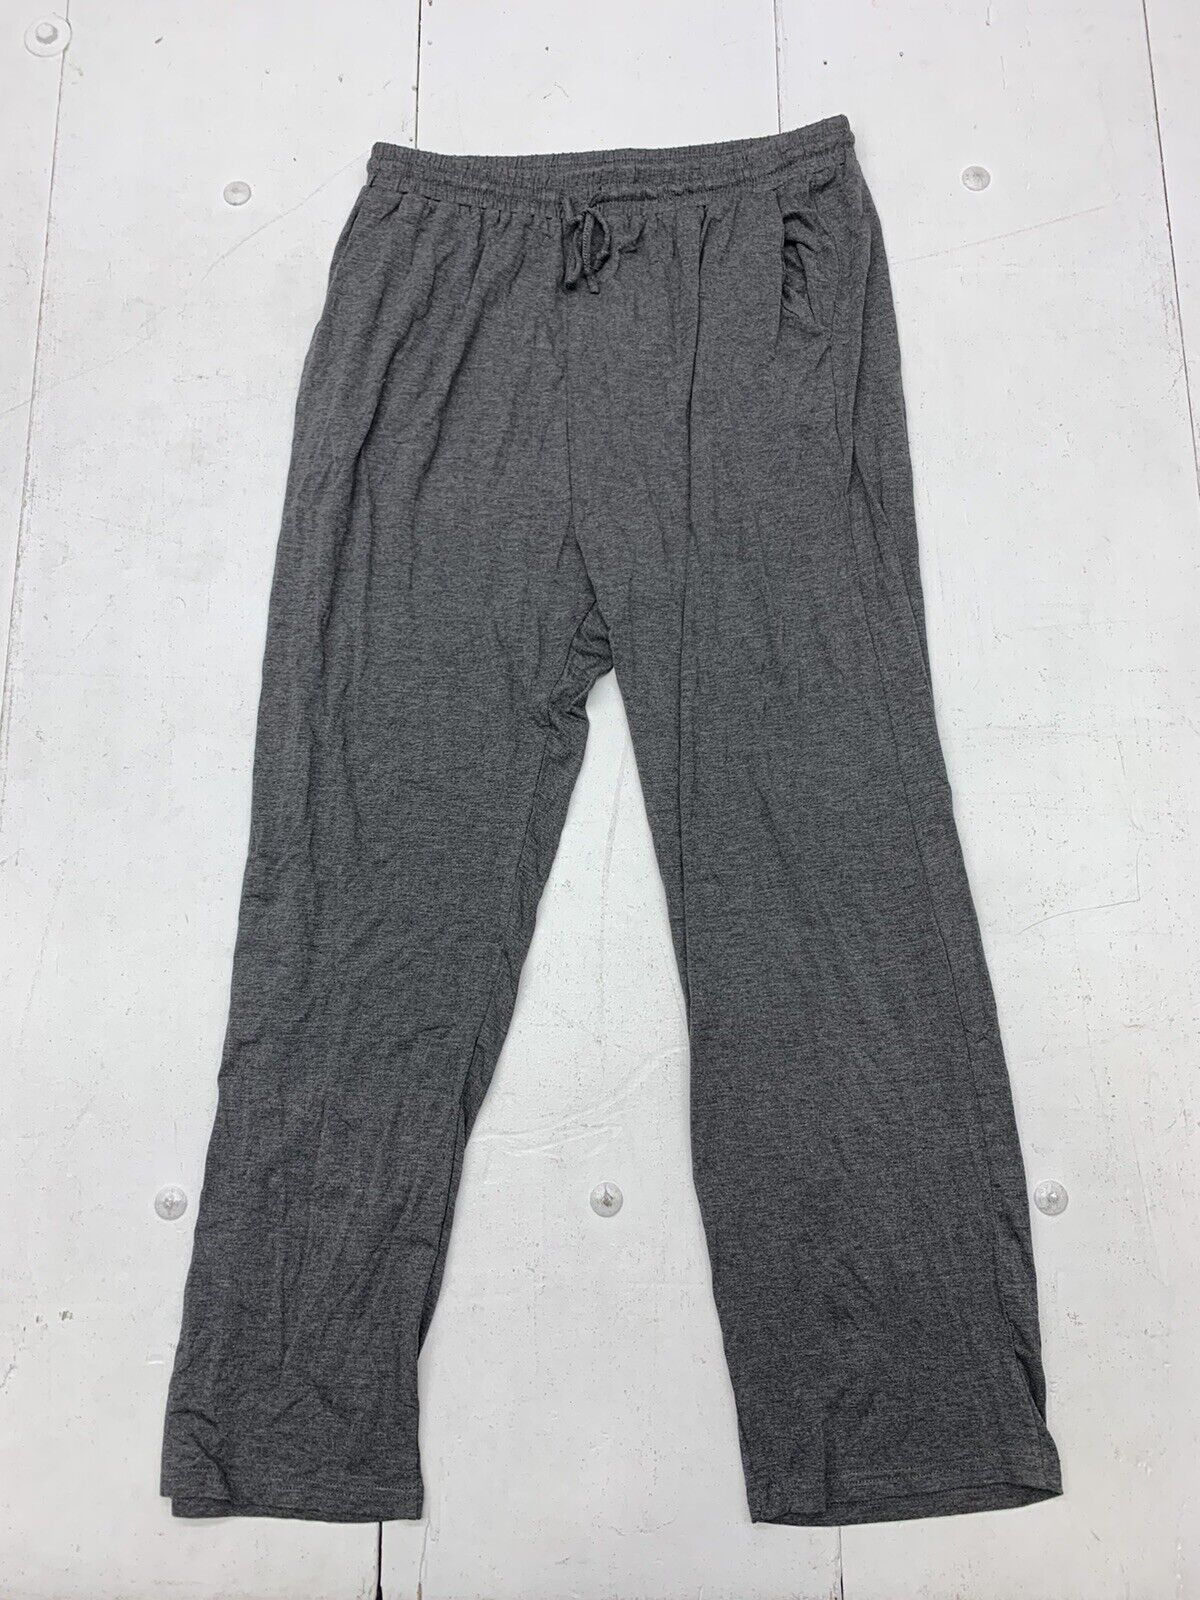 Unbranded Womens Dark Grey Pajama Pants Size XL - beyond exchange